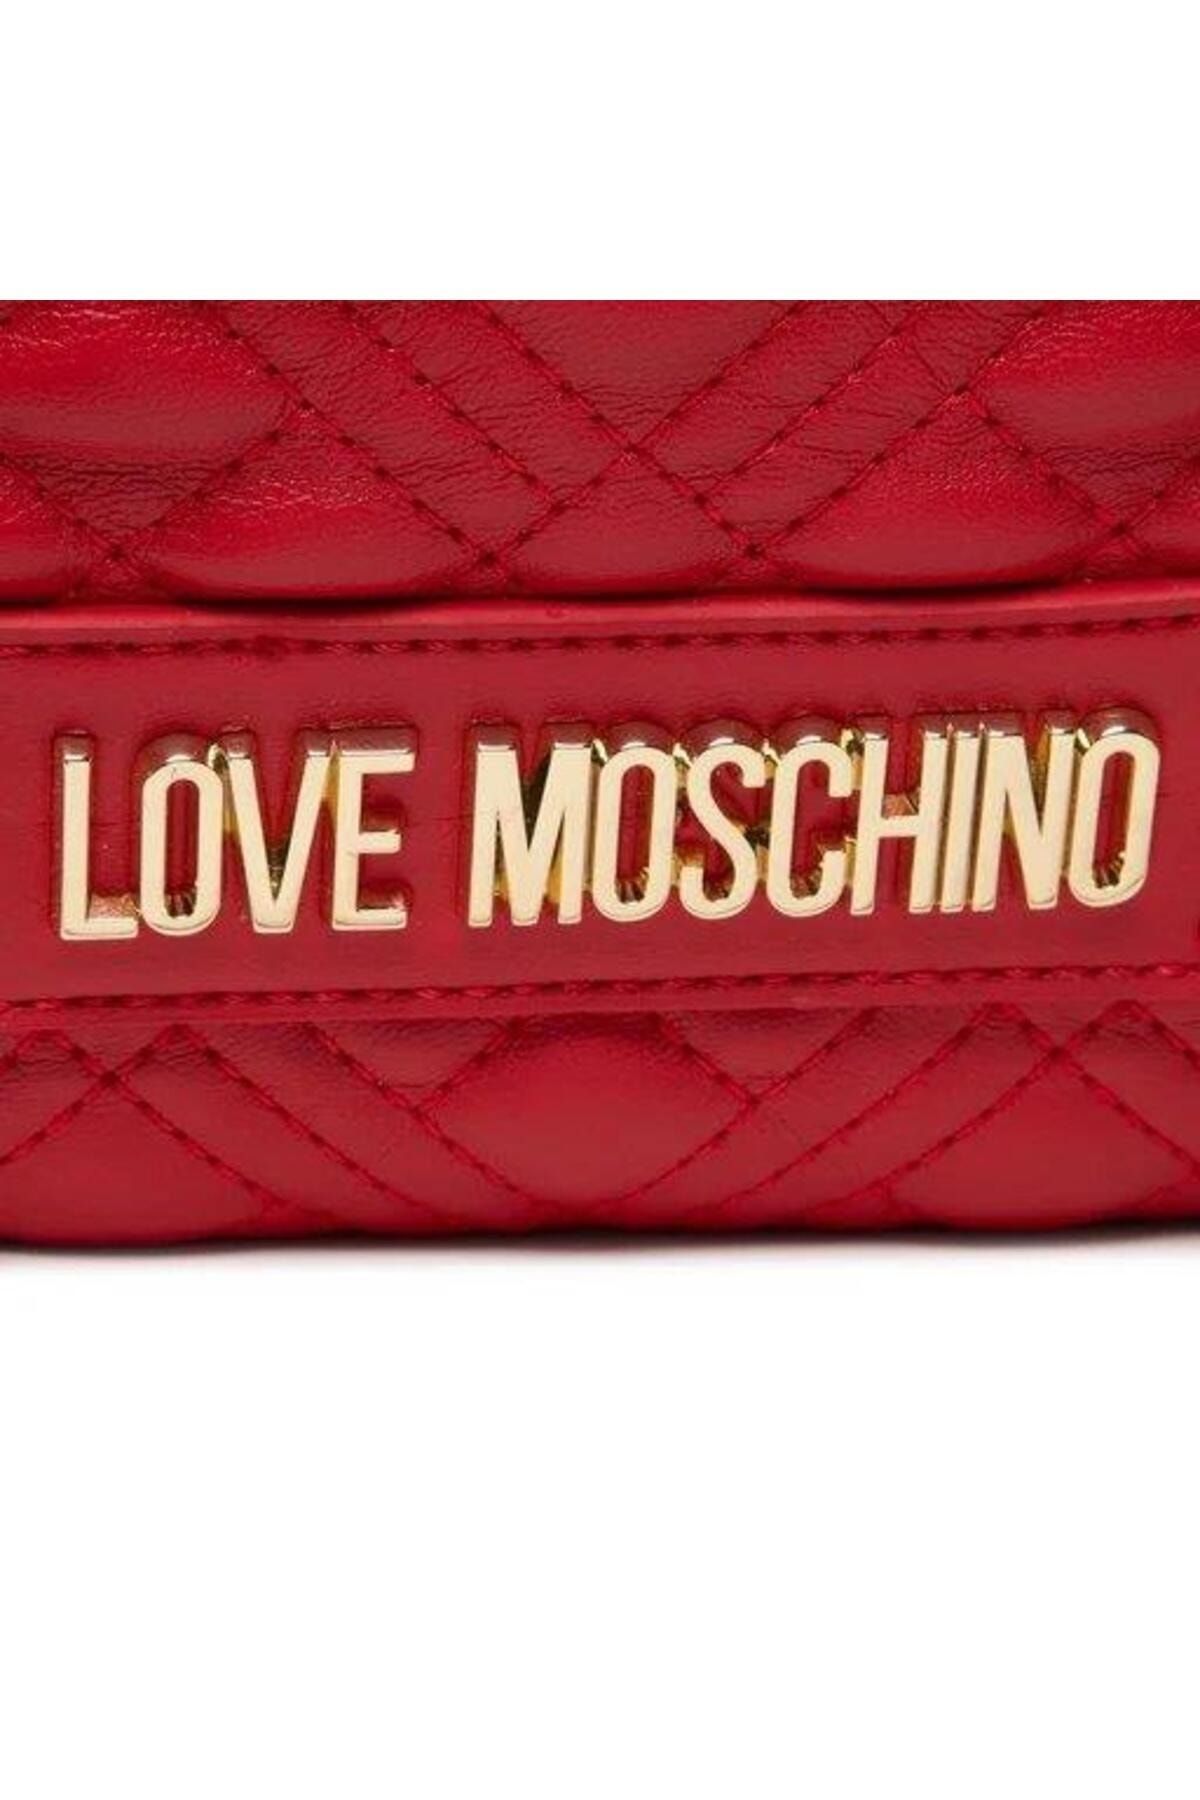 Moschino کیسه کمر قرمز